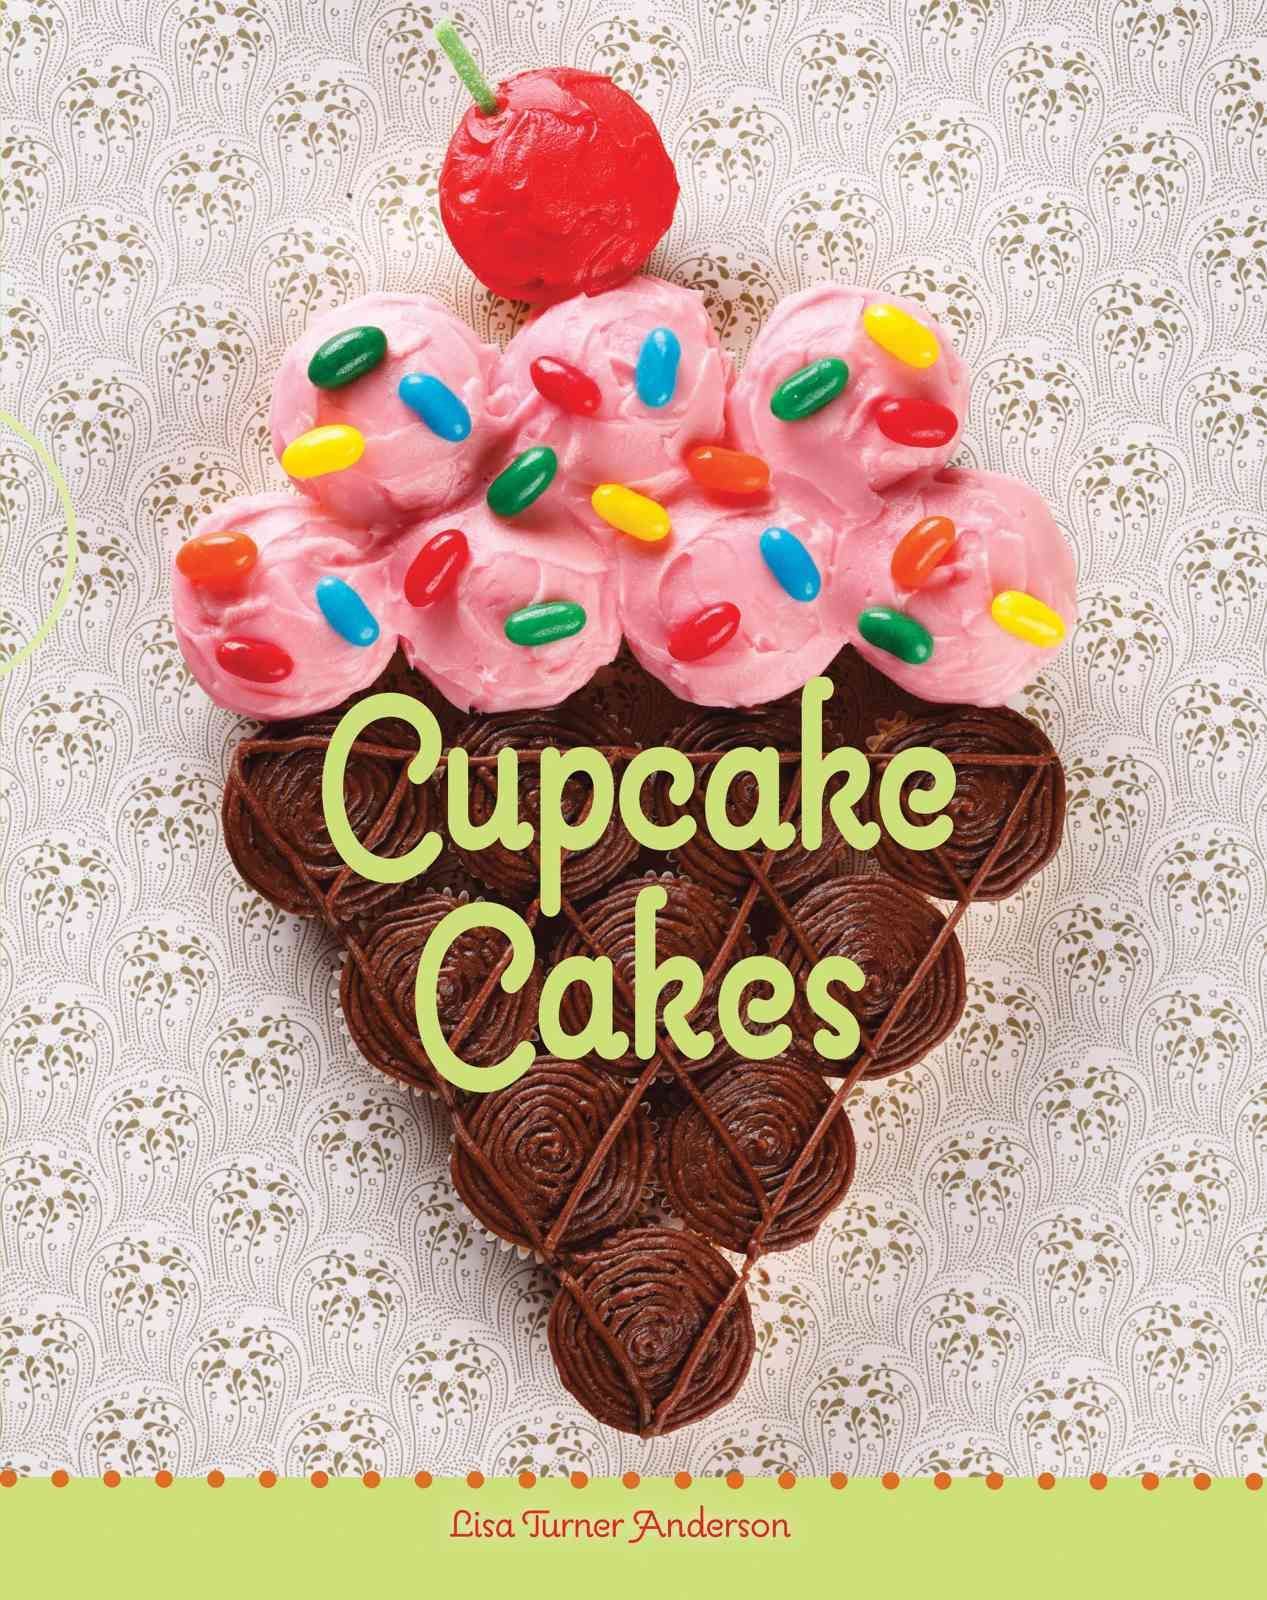 Cupcake ice cream cake – for the ice cream party